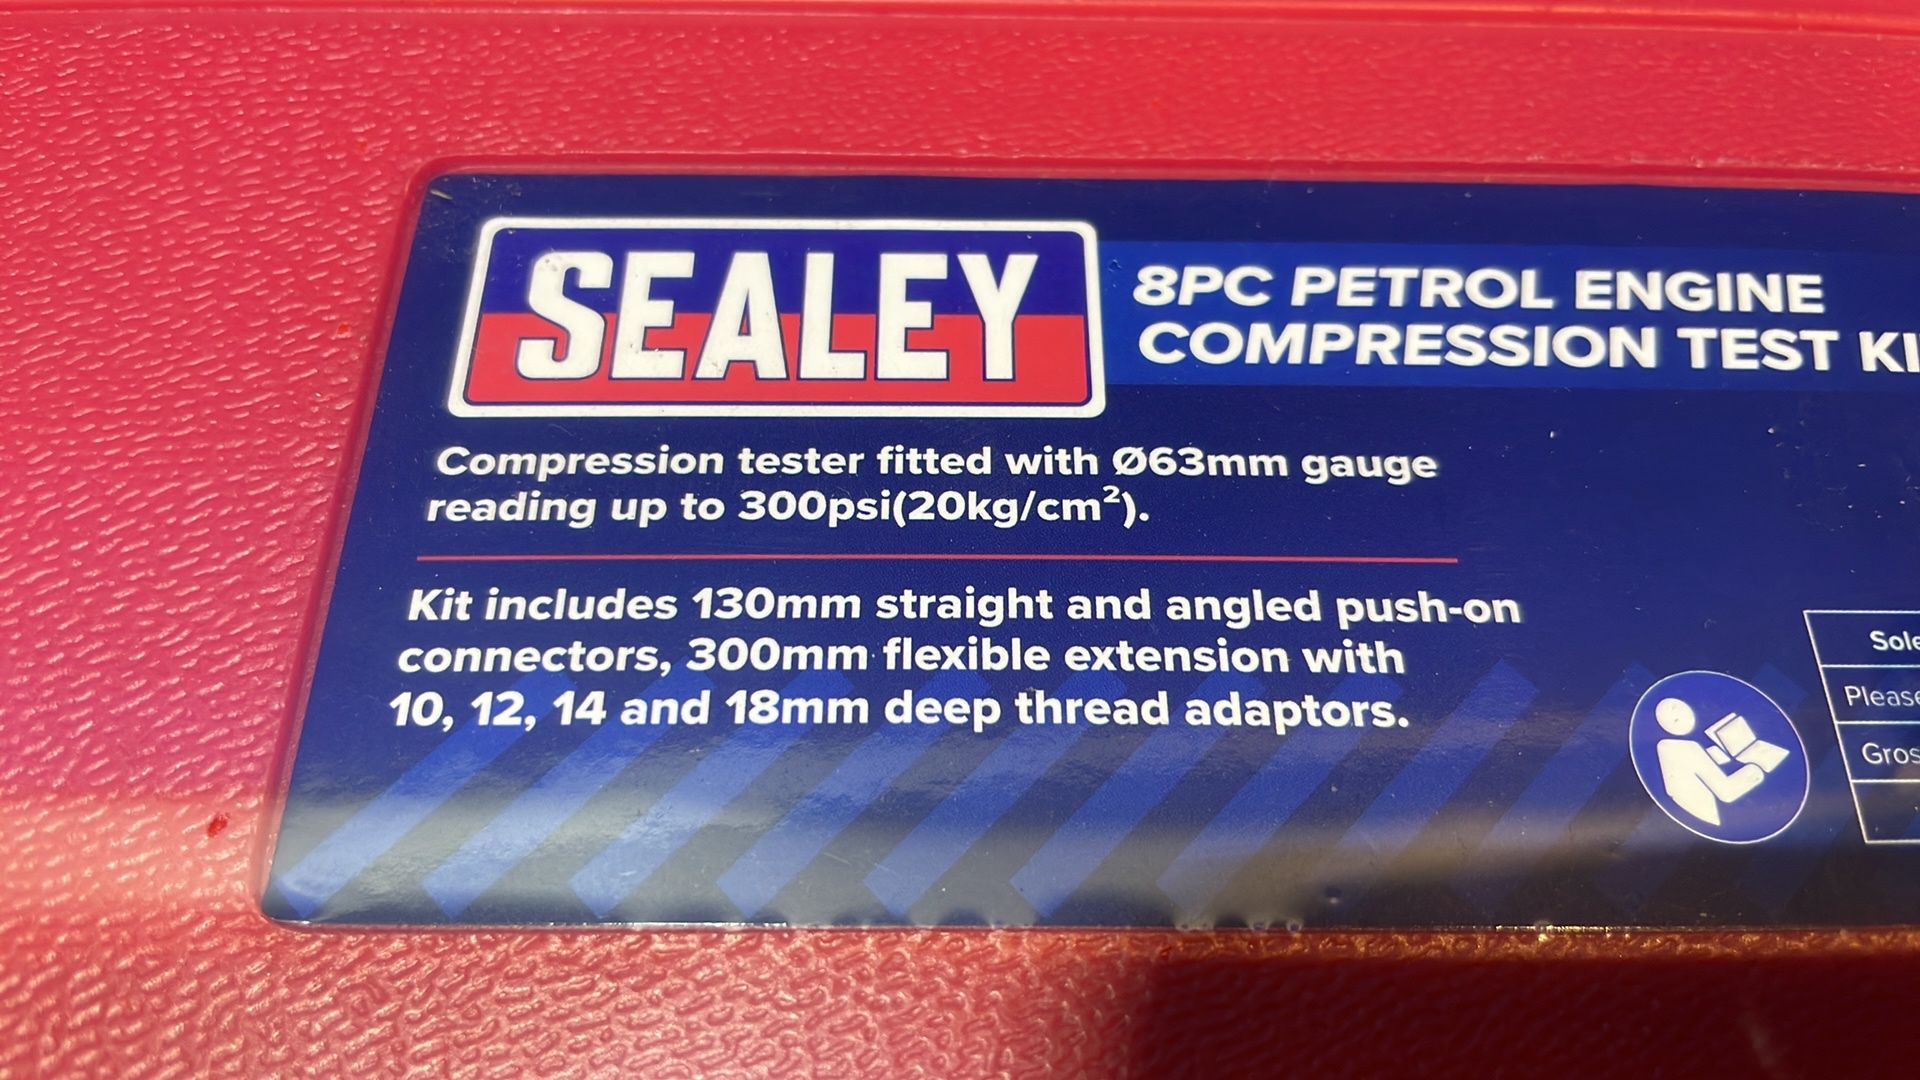 2 x Sealey Petrol Engine Compression Test Kit 8pc - Image 3 of 3